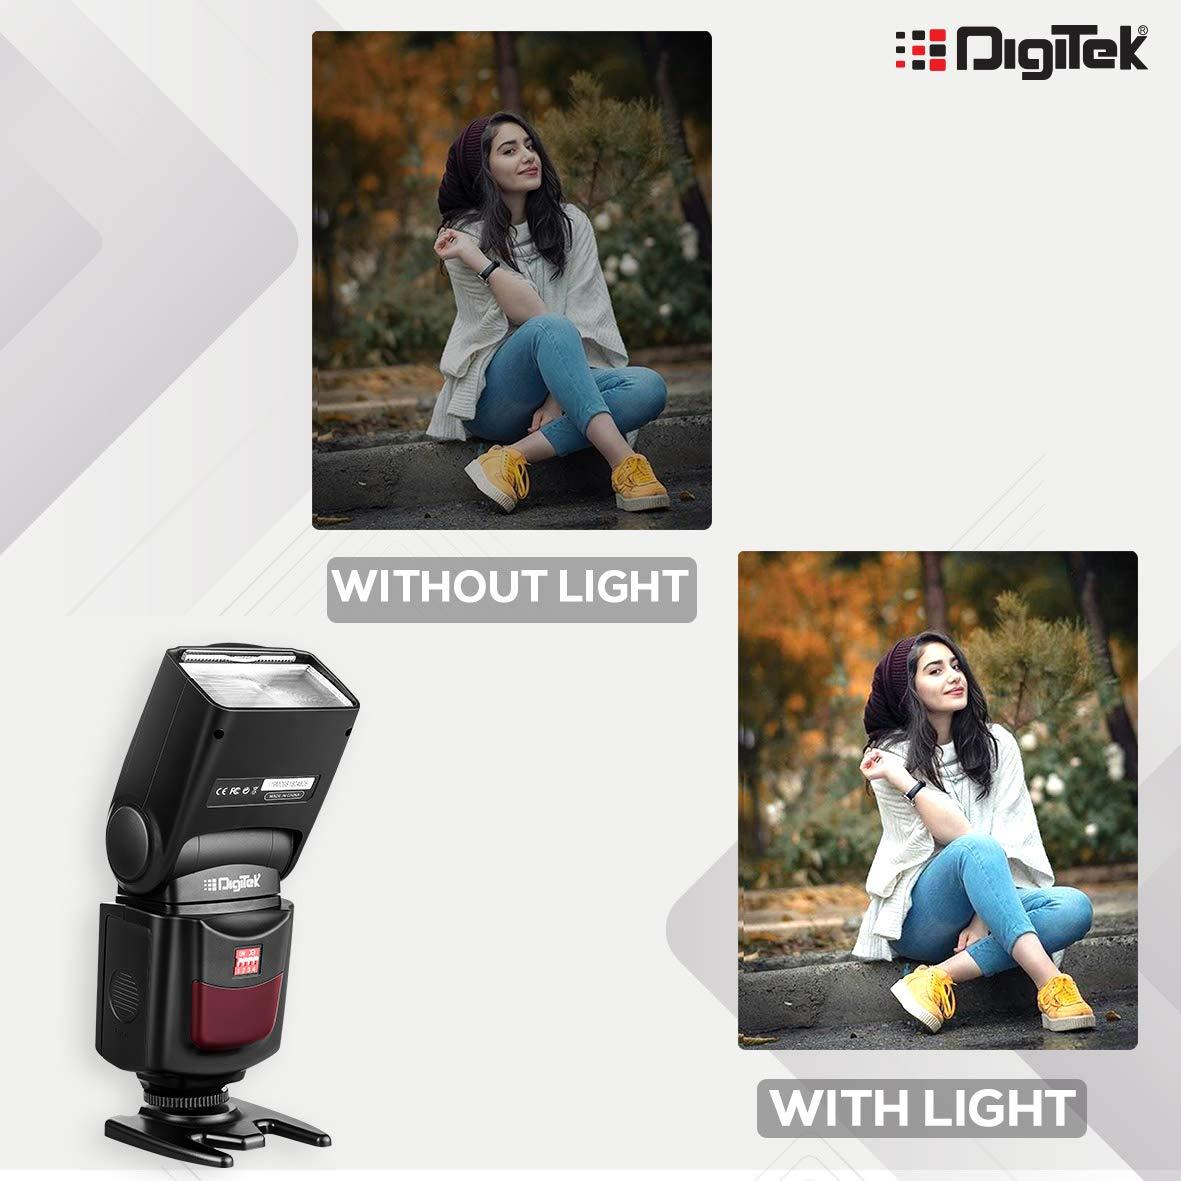 Digitek (DFL-088) Universal Electronic Flash Speedlite for DSLR Cameras Canon Nikon Pentax Olympus with Standard Hot Shoe Mount (Without Trigger) - Digitek